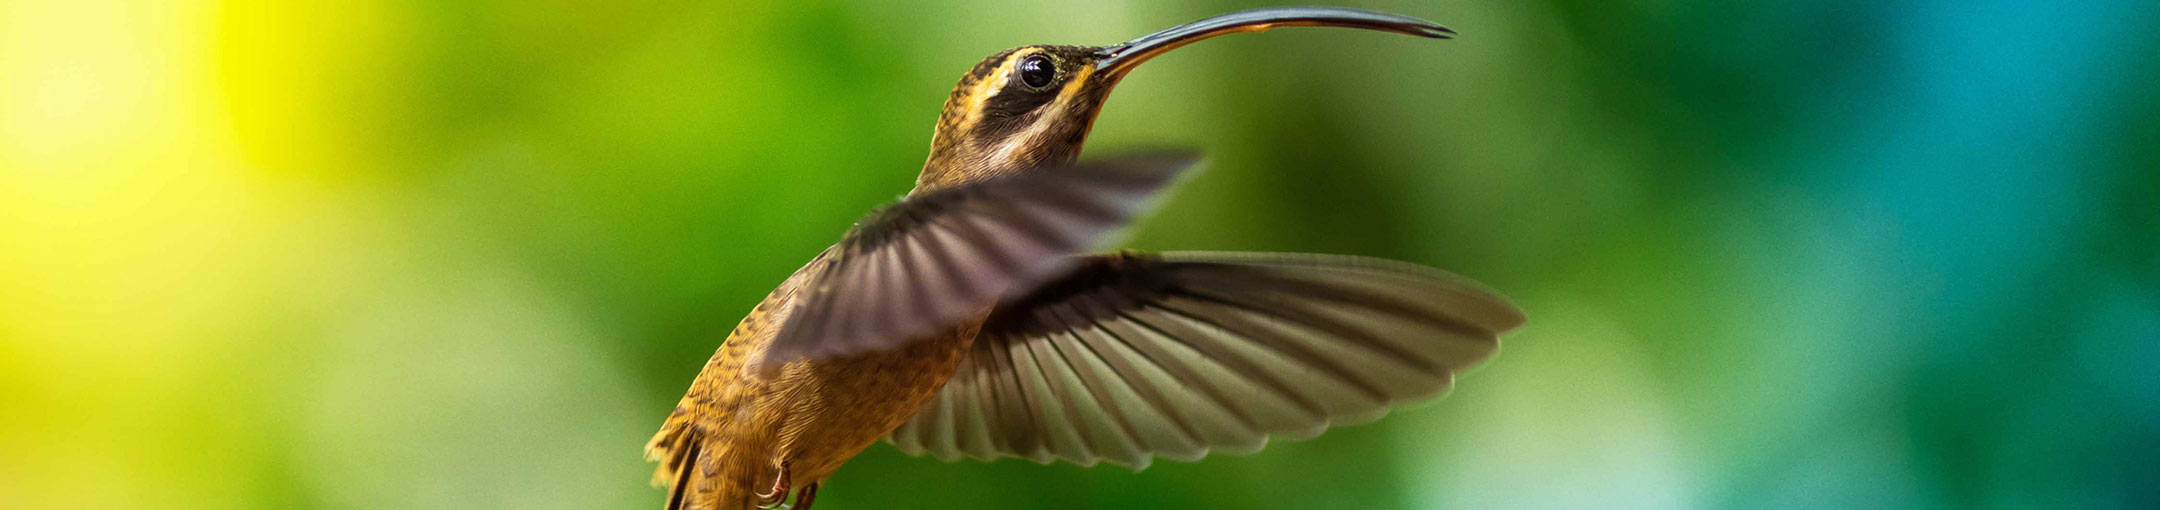 Close-up photo of a hummingbird in flight.